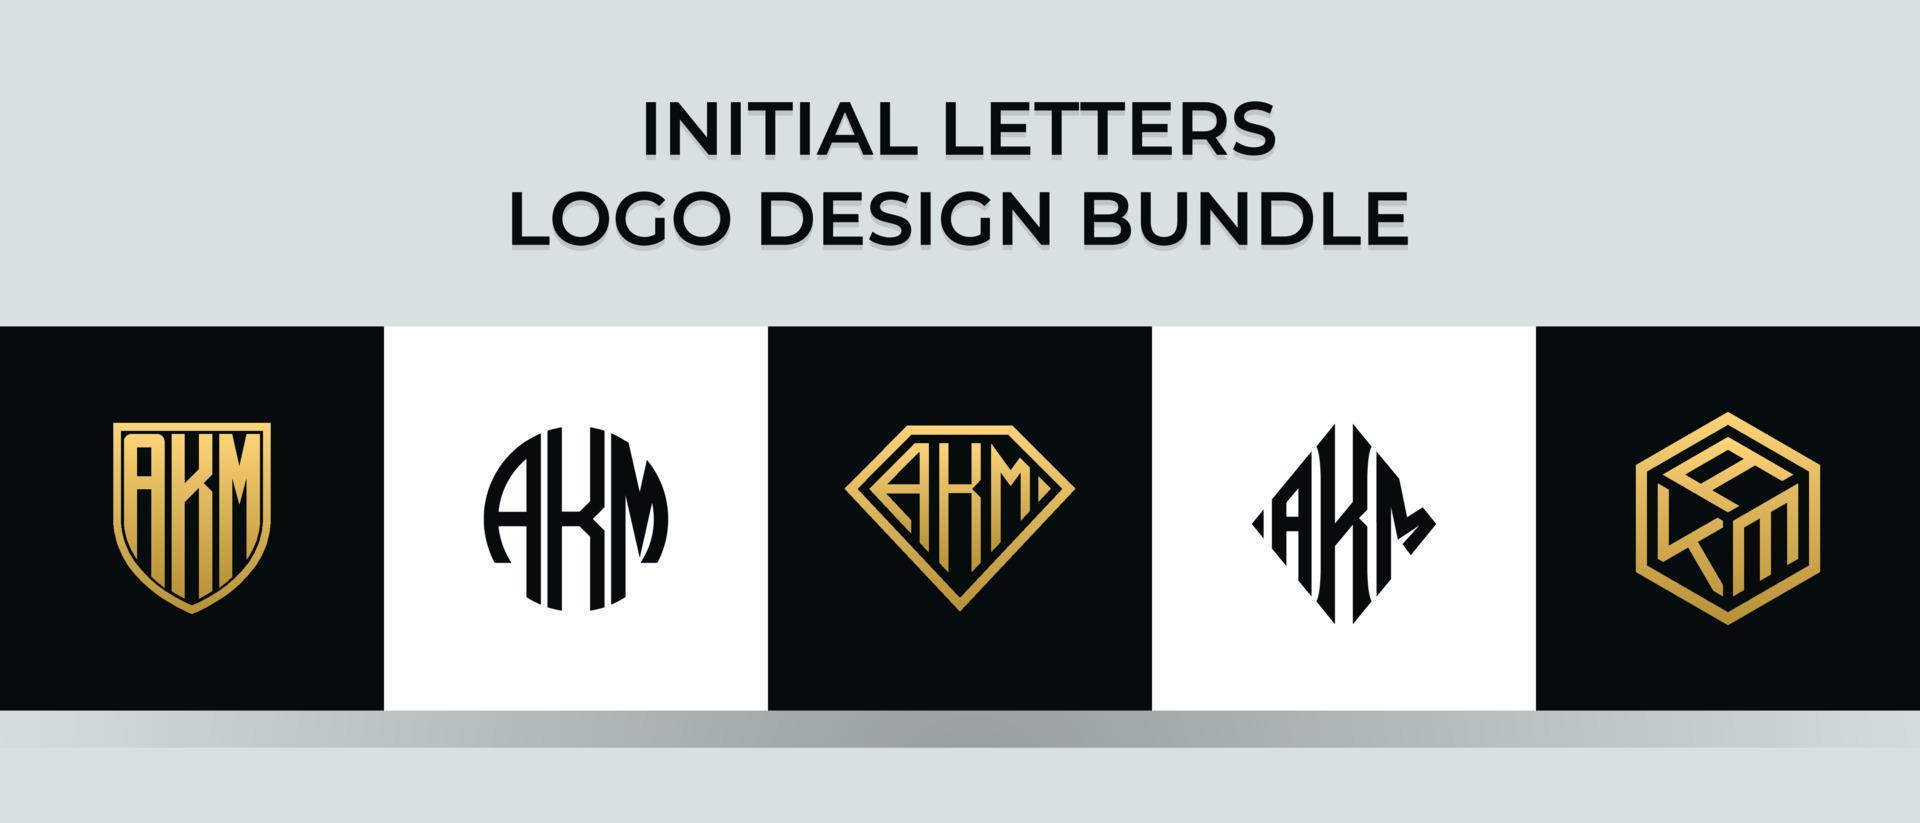 Initial letters AKM logo designs Bundle vector